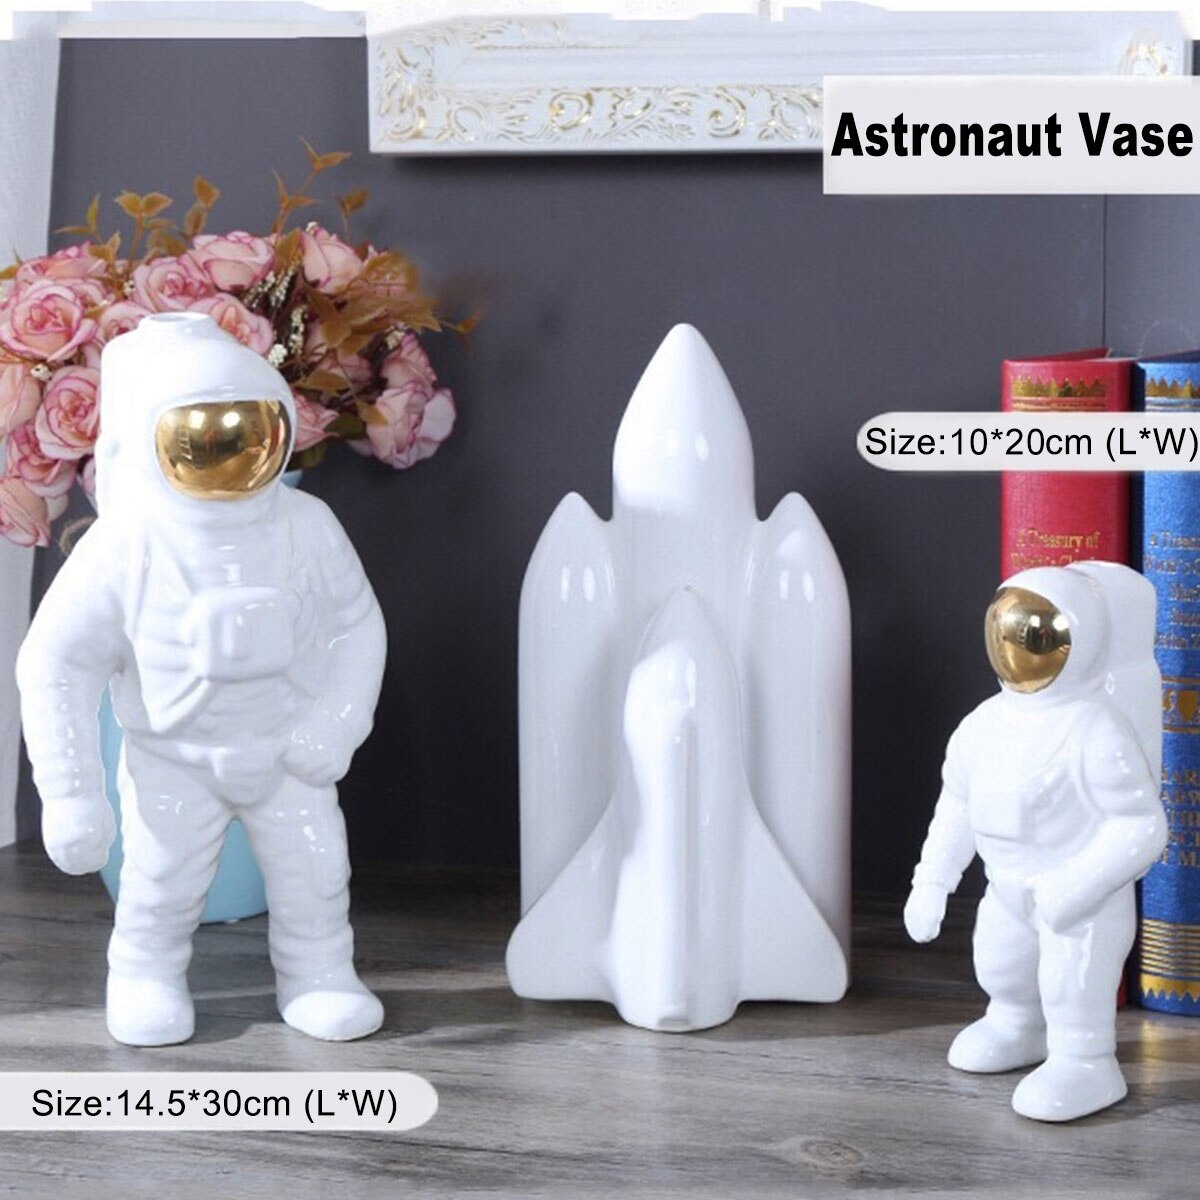 Guldplads mand skulptur astronaut keramisk vase kreativ moderne kosmonaut model ornament statue have bordplade boligdekoration